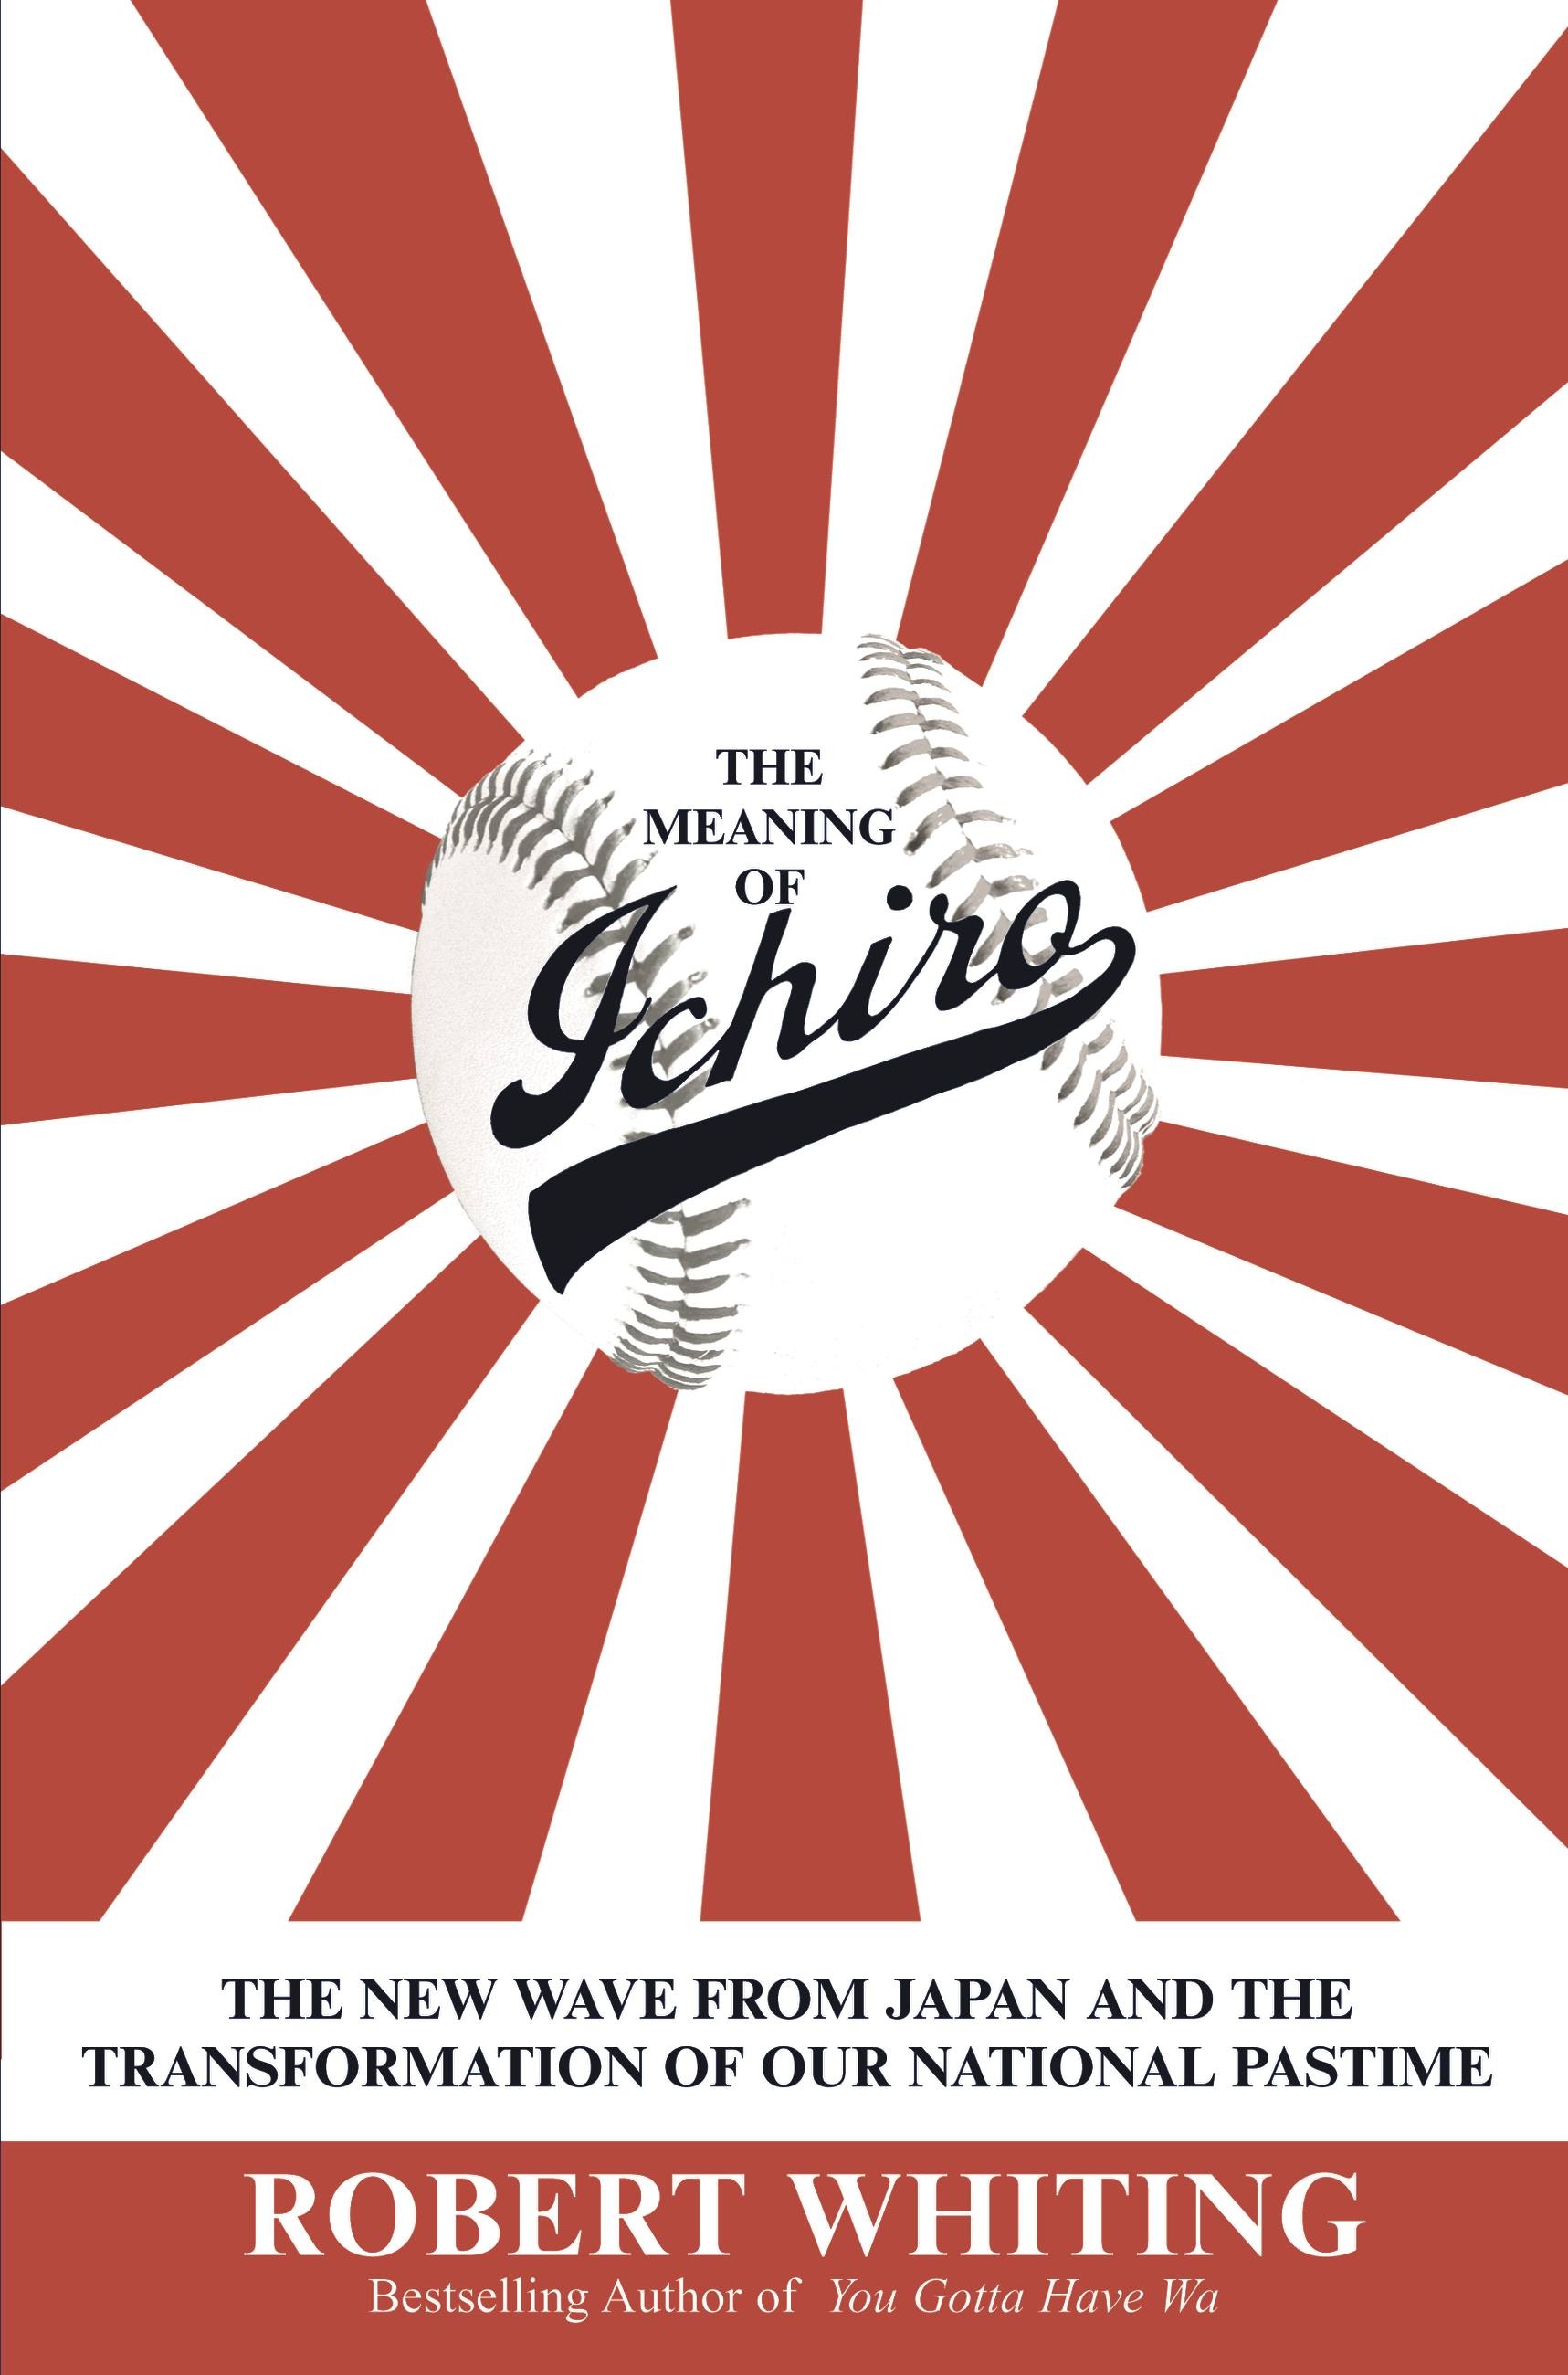 Ichiro - Blue Wave Baseball Summer T-Shirt Japanese Promotional